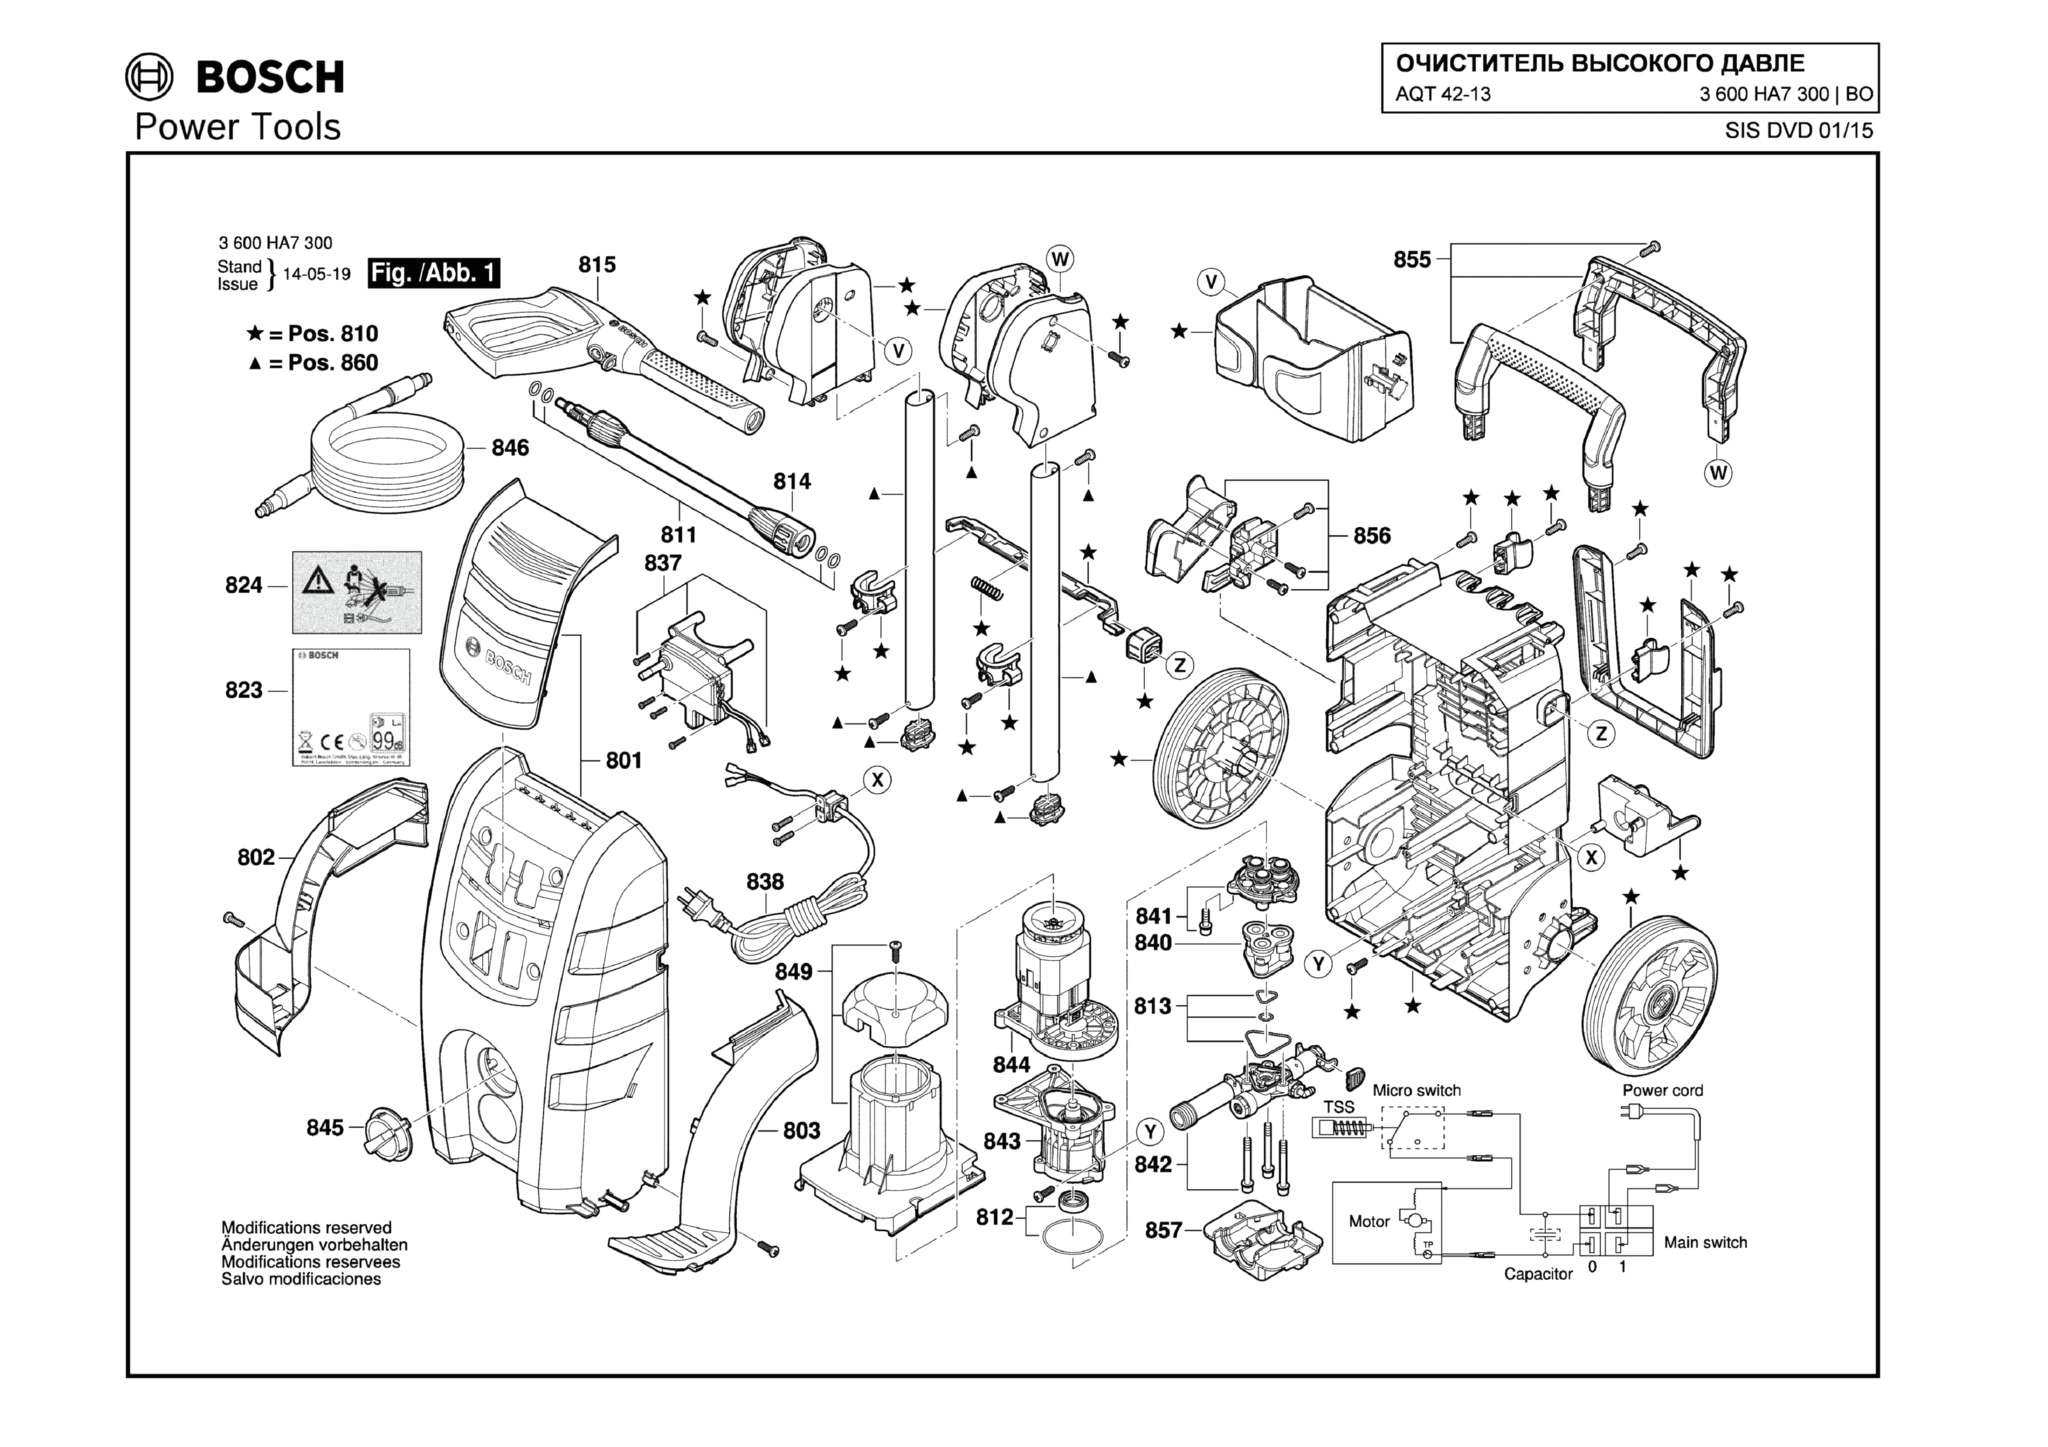 Запчасти, схема и деталировка Bosch AQT 42-13 (ТИП 3600HA7300)